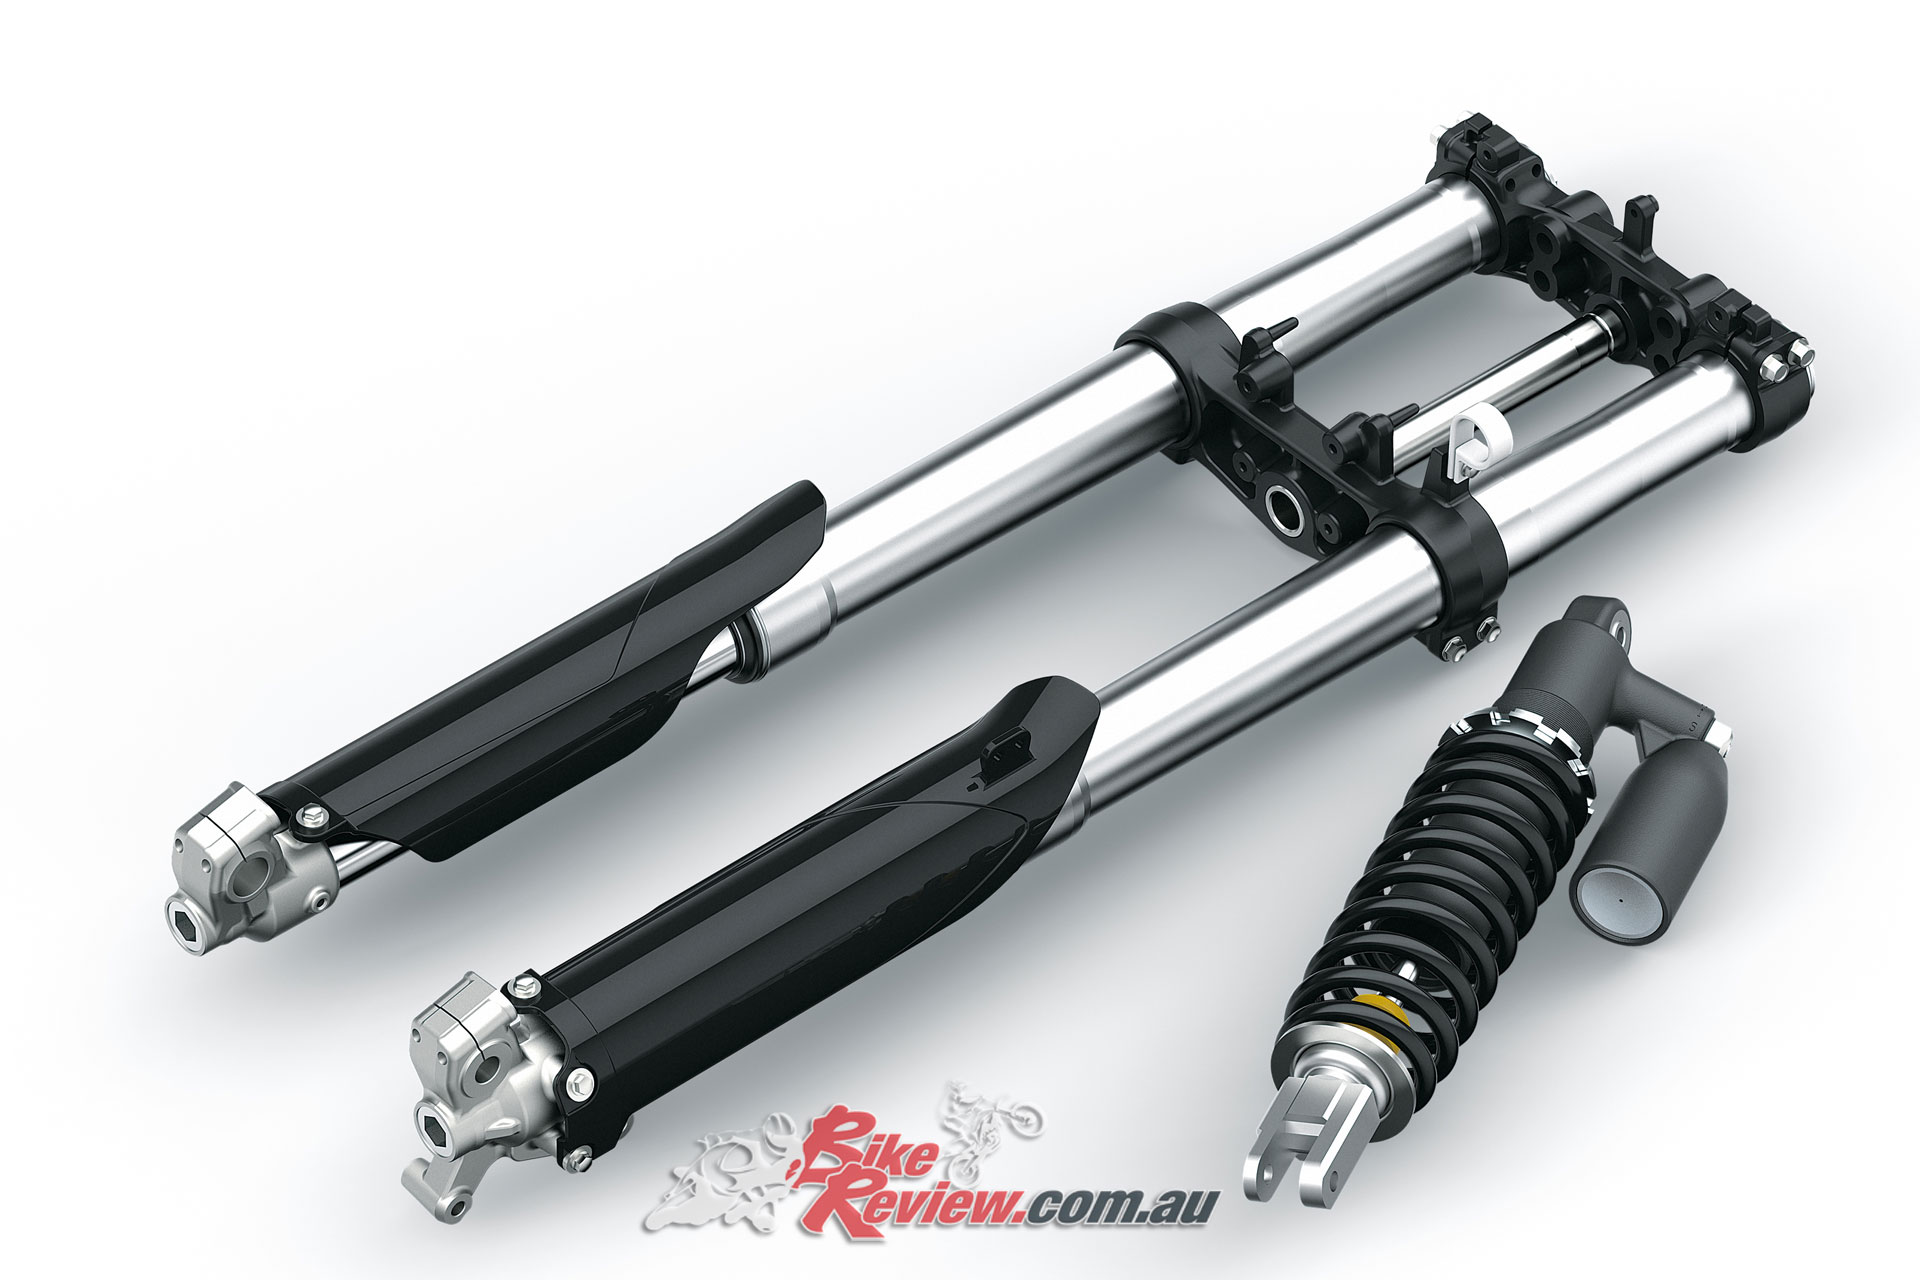 2020 Kawasaki KLX300R - 43mm inverted forks and Uni-track shock